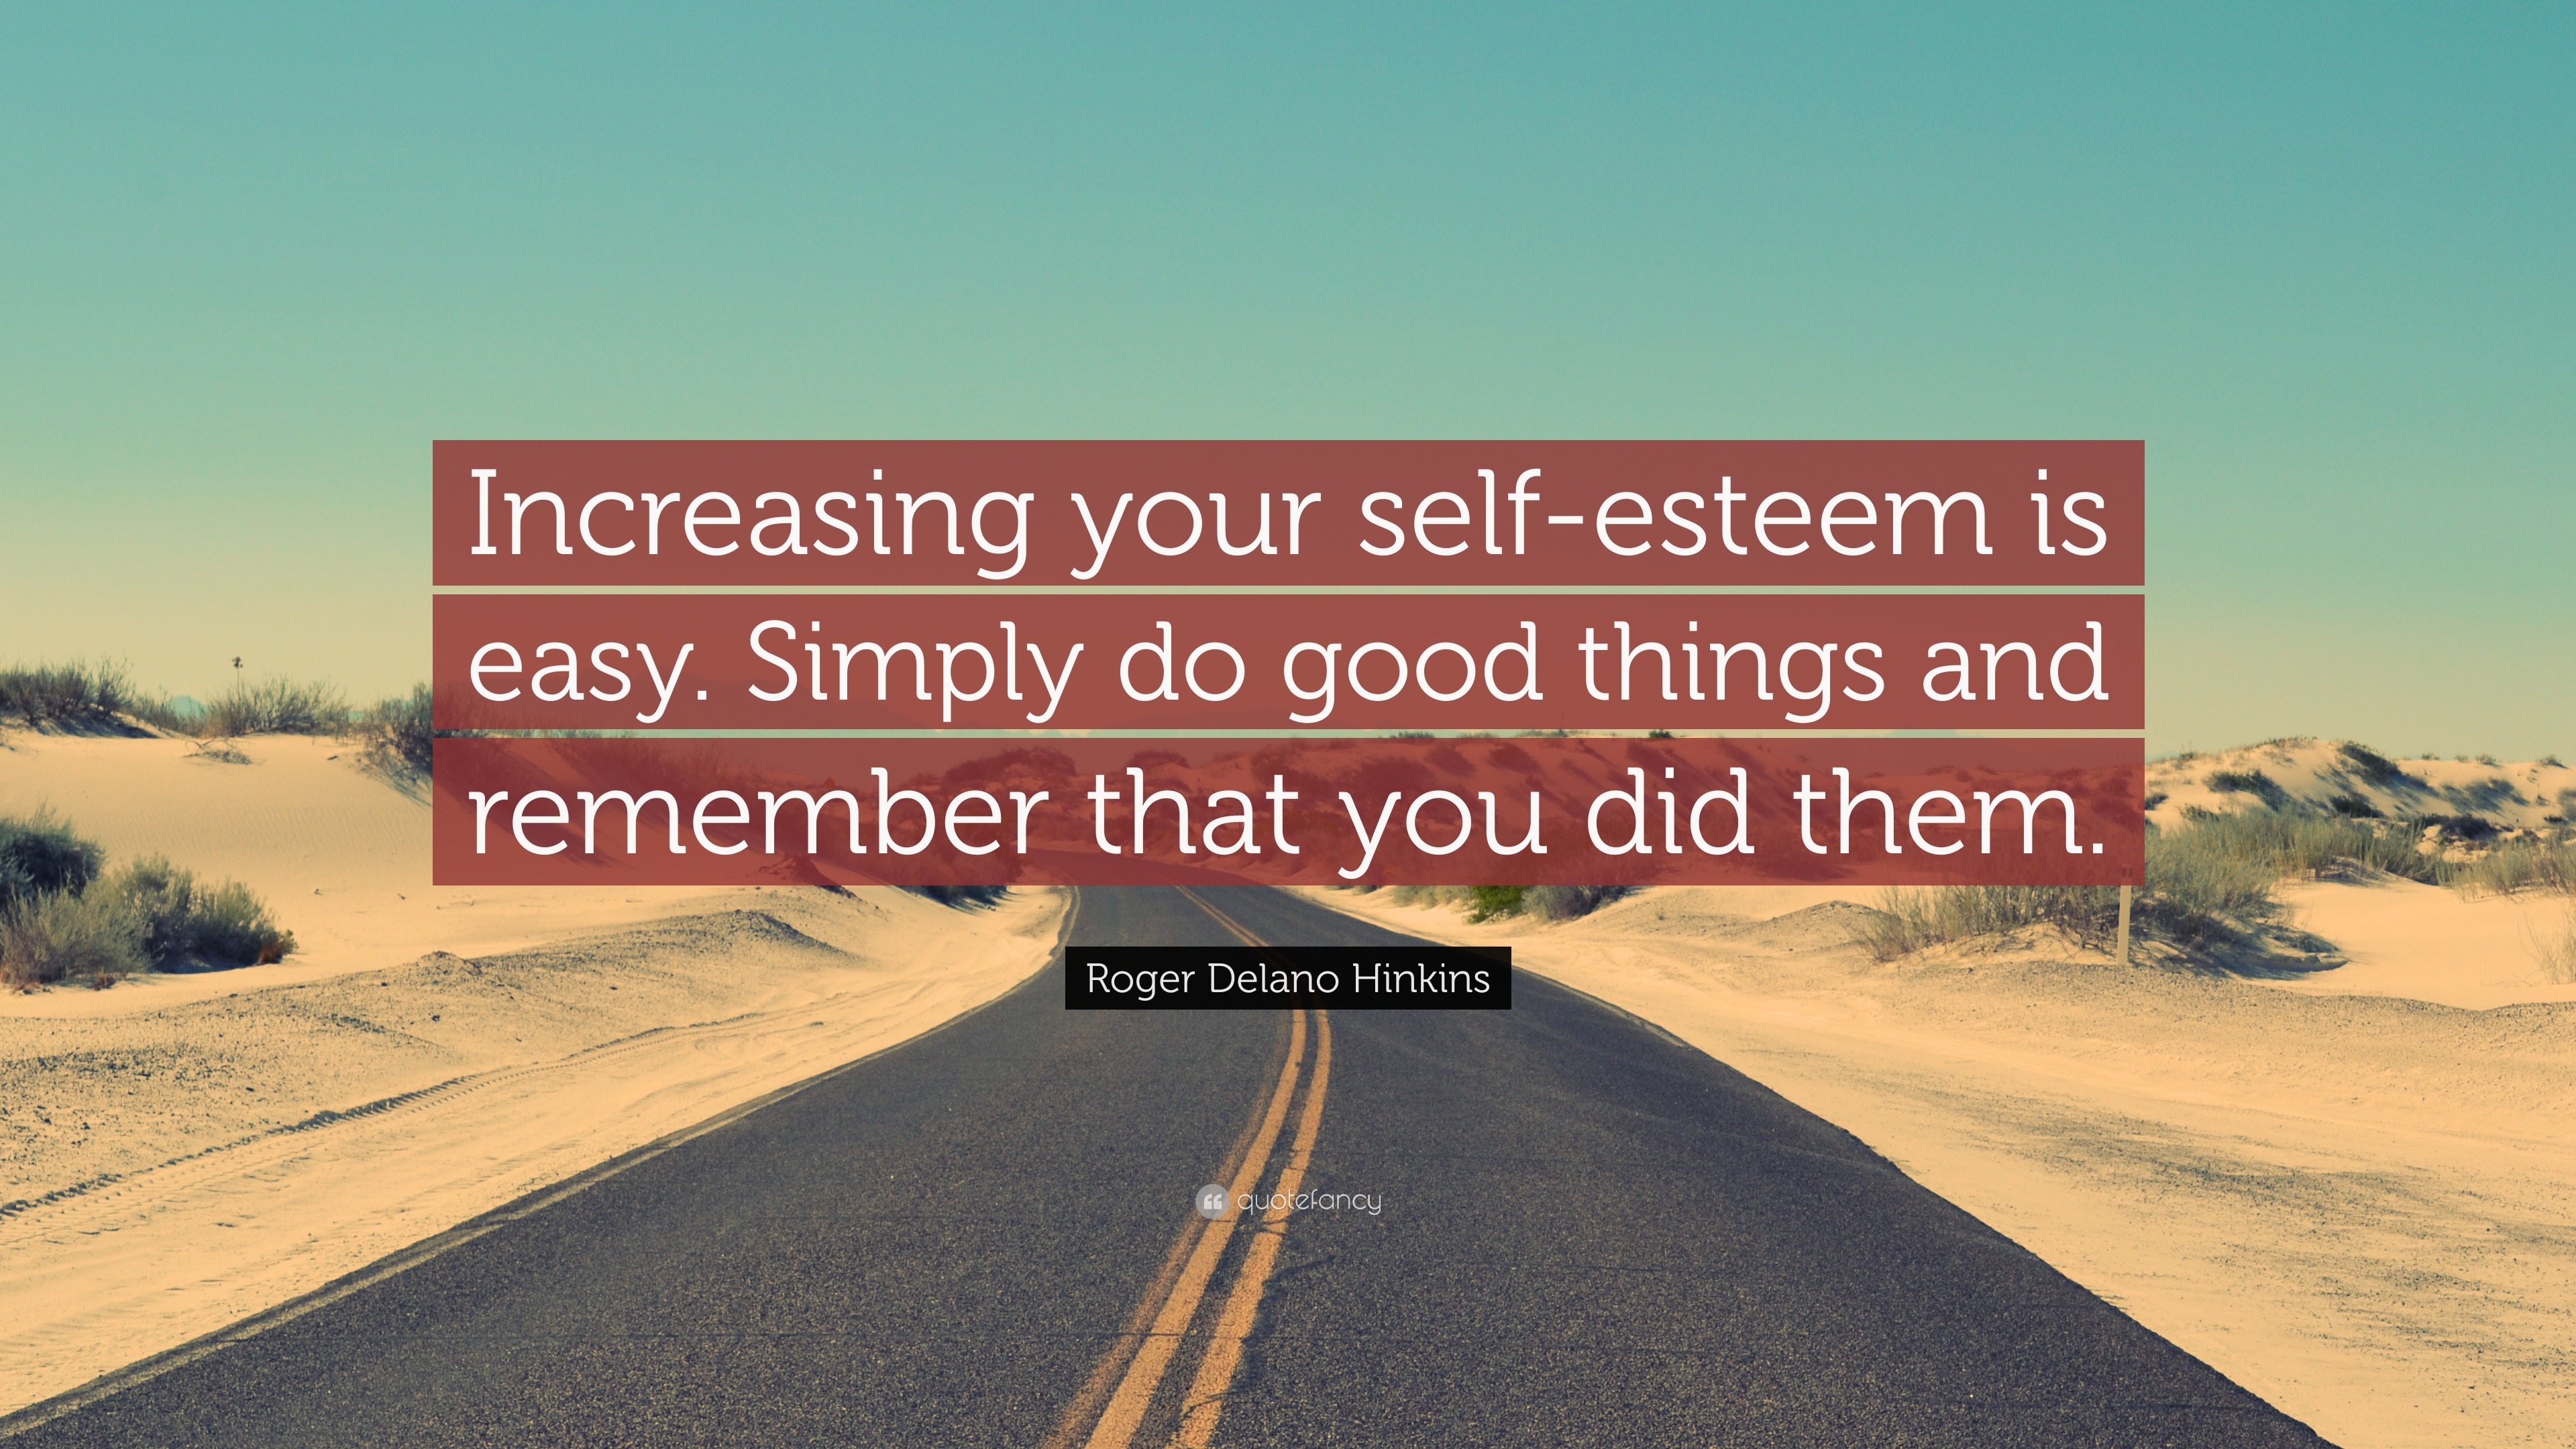 Roger Delano Hinkins Quote: “Increasing your self-esteem is easy